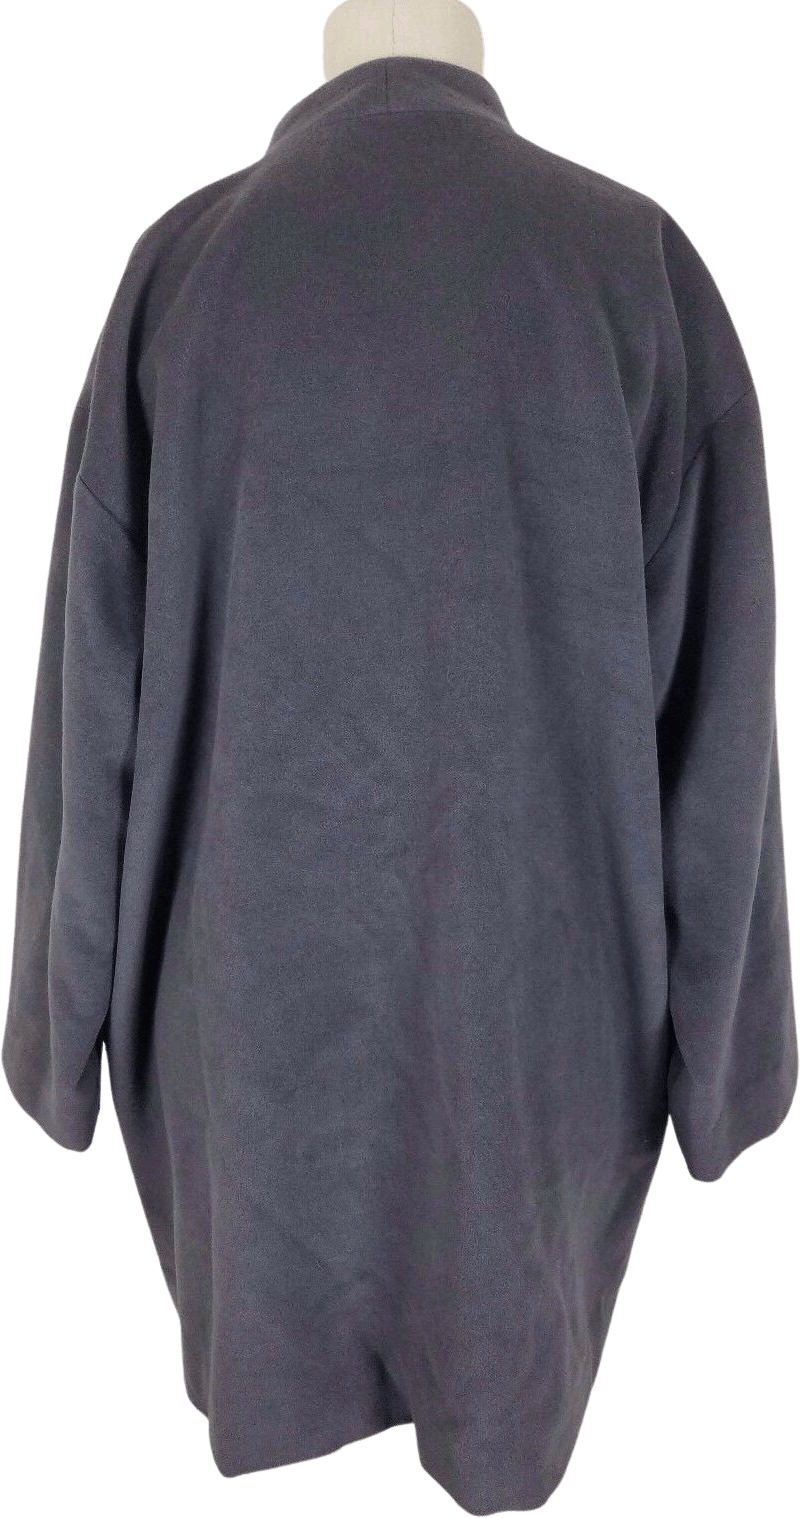 Vintage Gray Cashmere Buttoned Peacoat by Dana Paris | Shop THRILLING